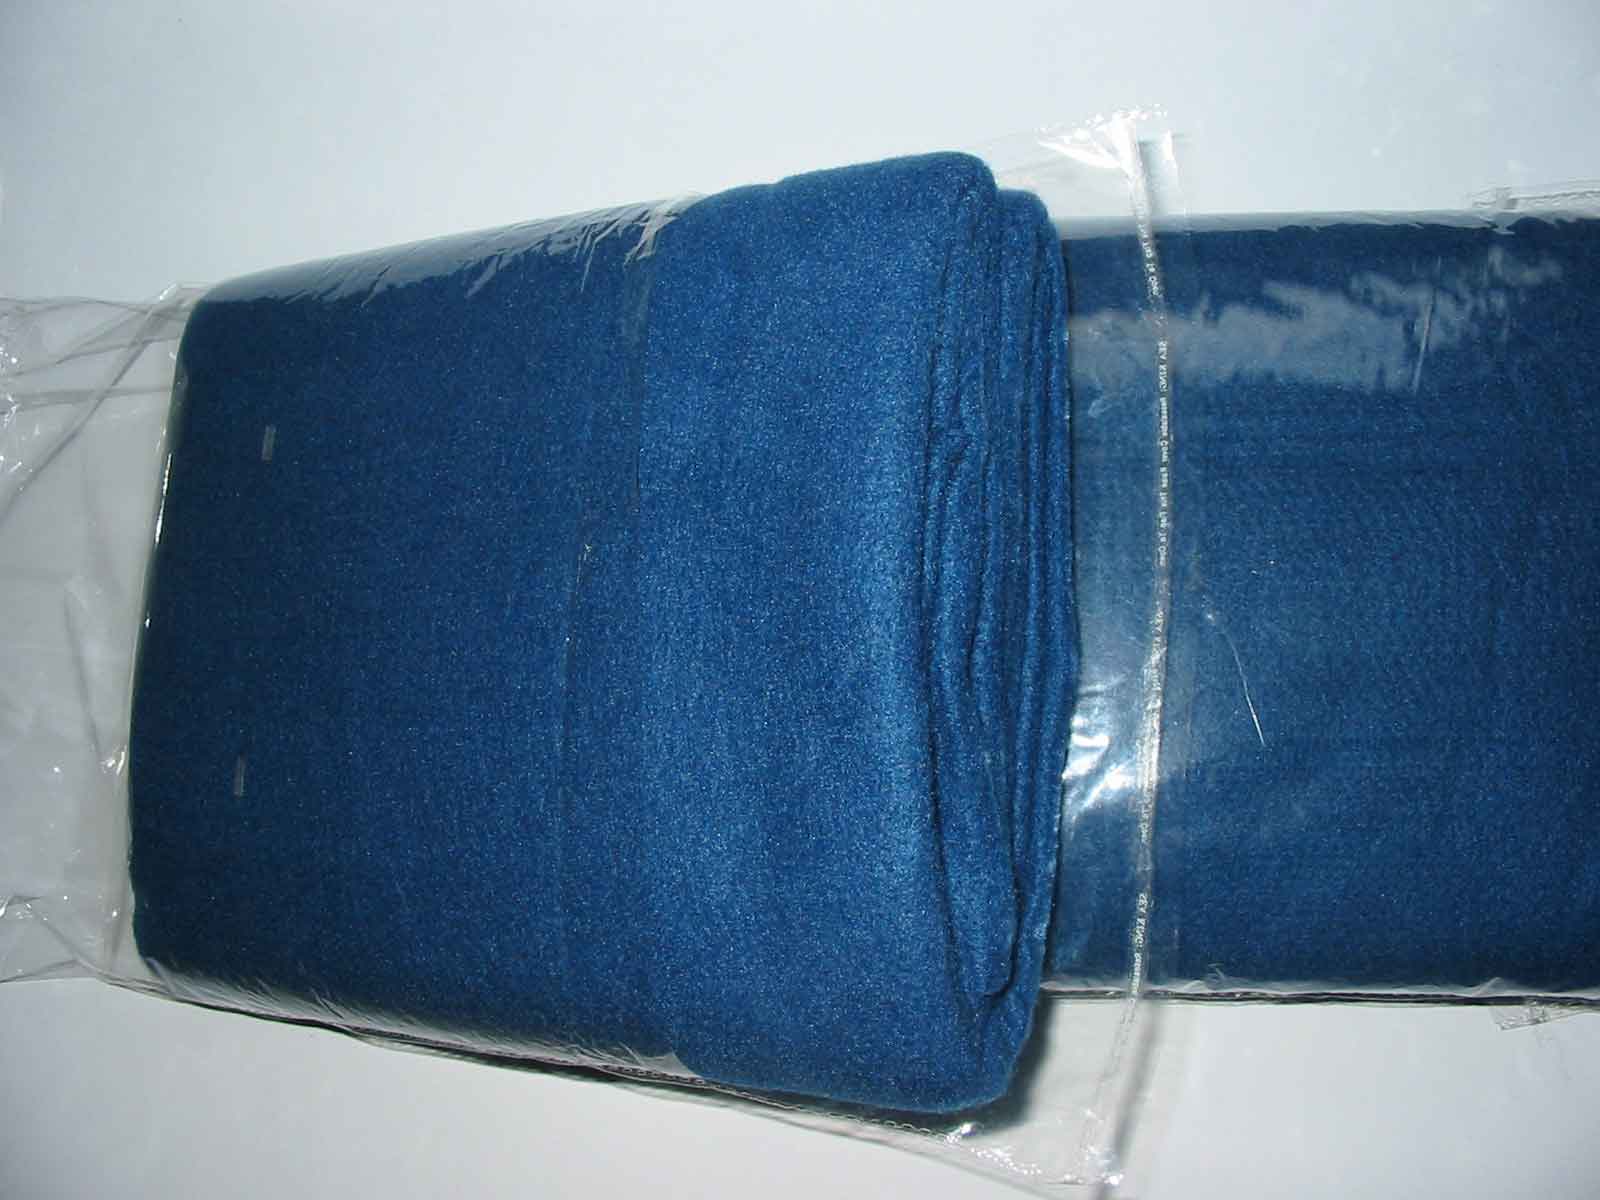  Disposable Blankets For Airlines (Одноразовые чехлы для авиакомпаний)